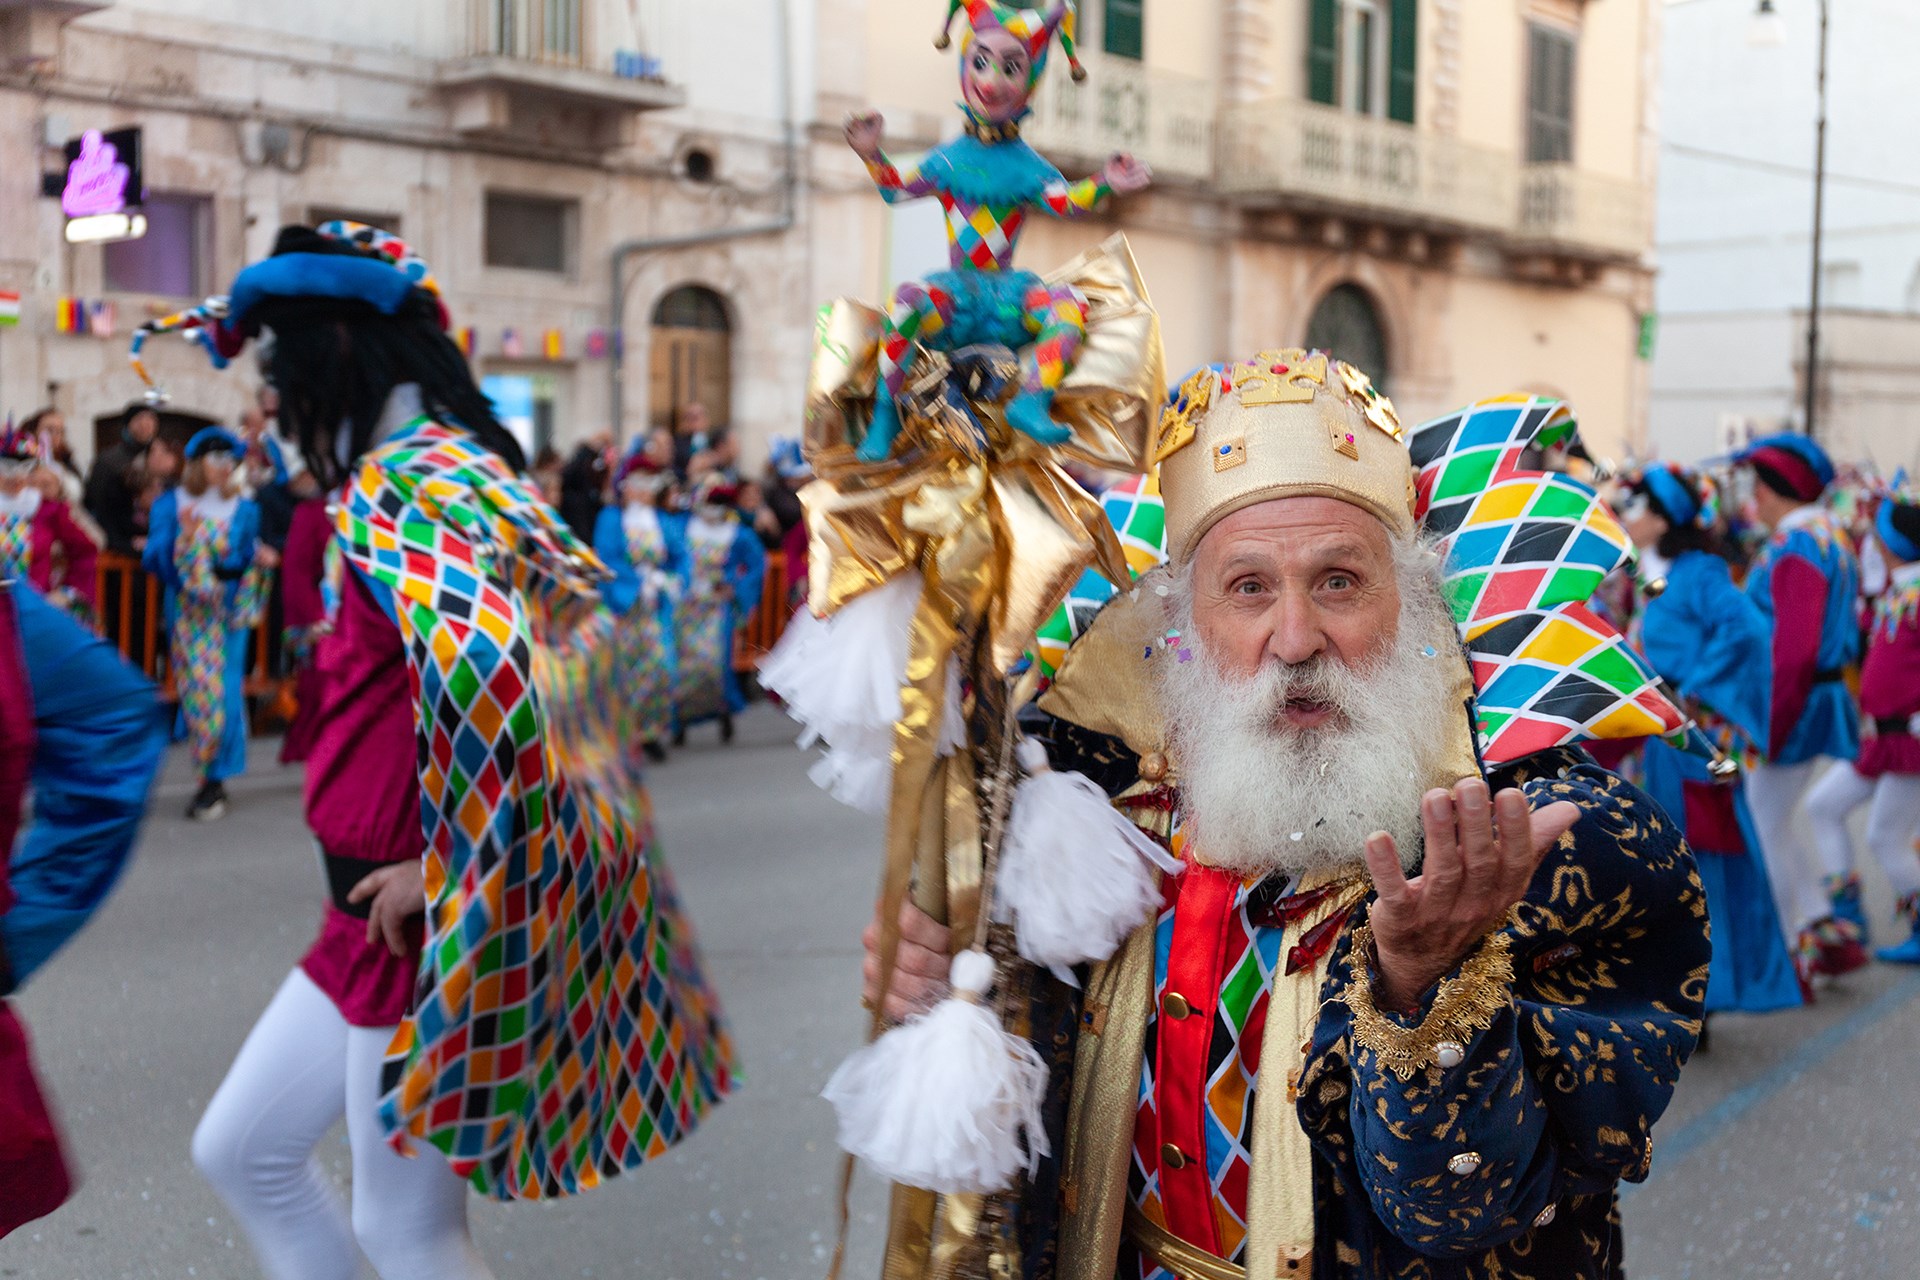 Festivals and events in Puglia